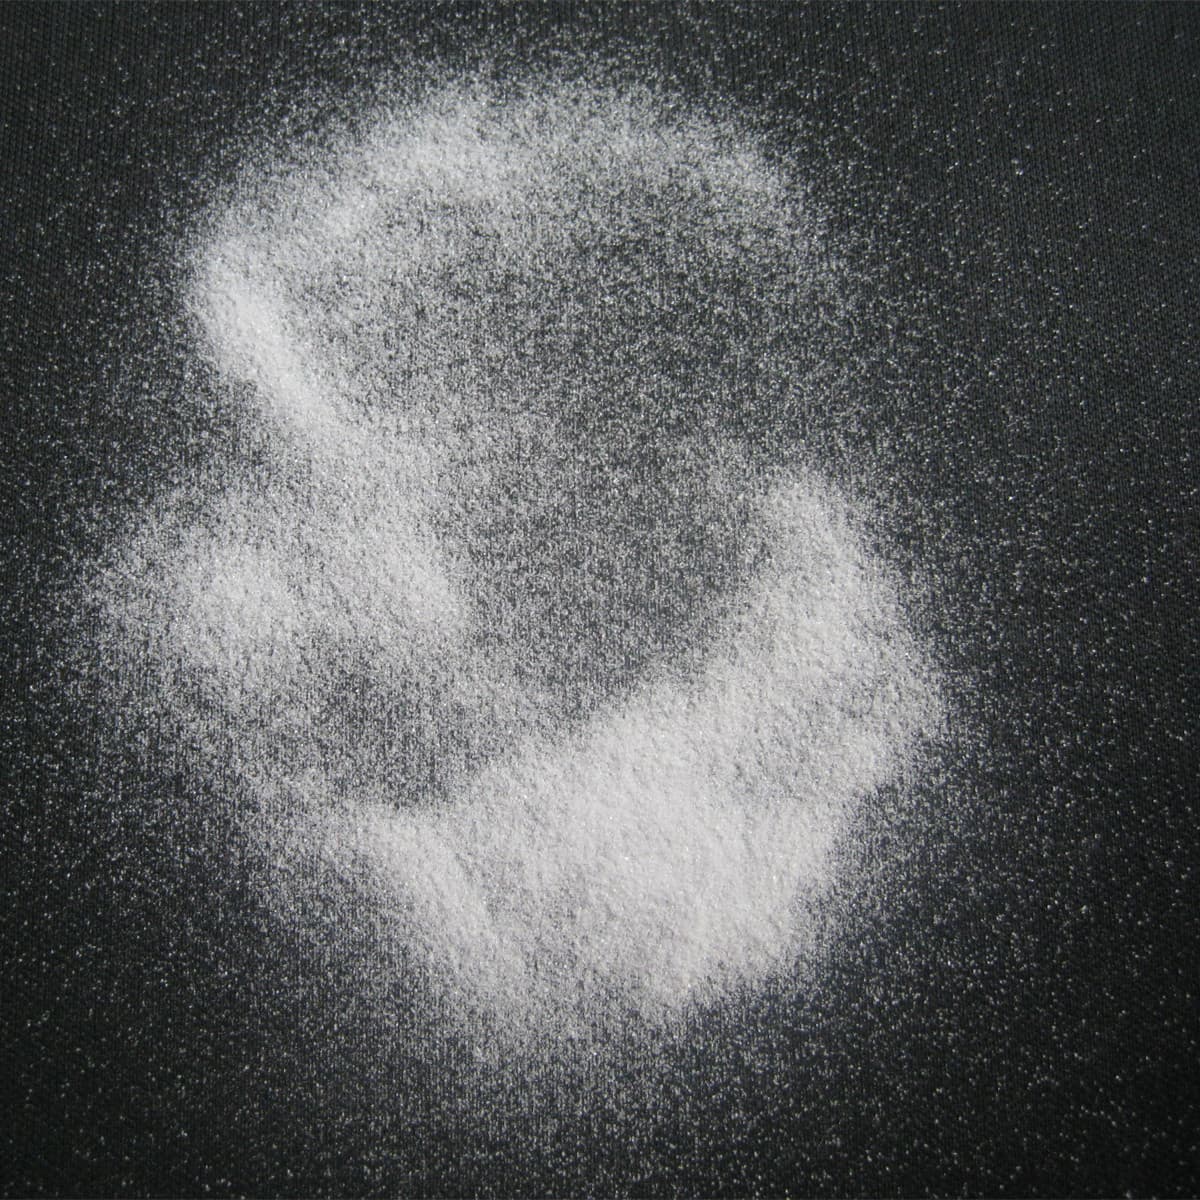 White fused alumina WFA_white corundum for sandblasting